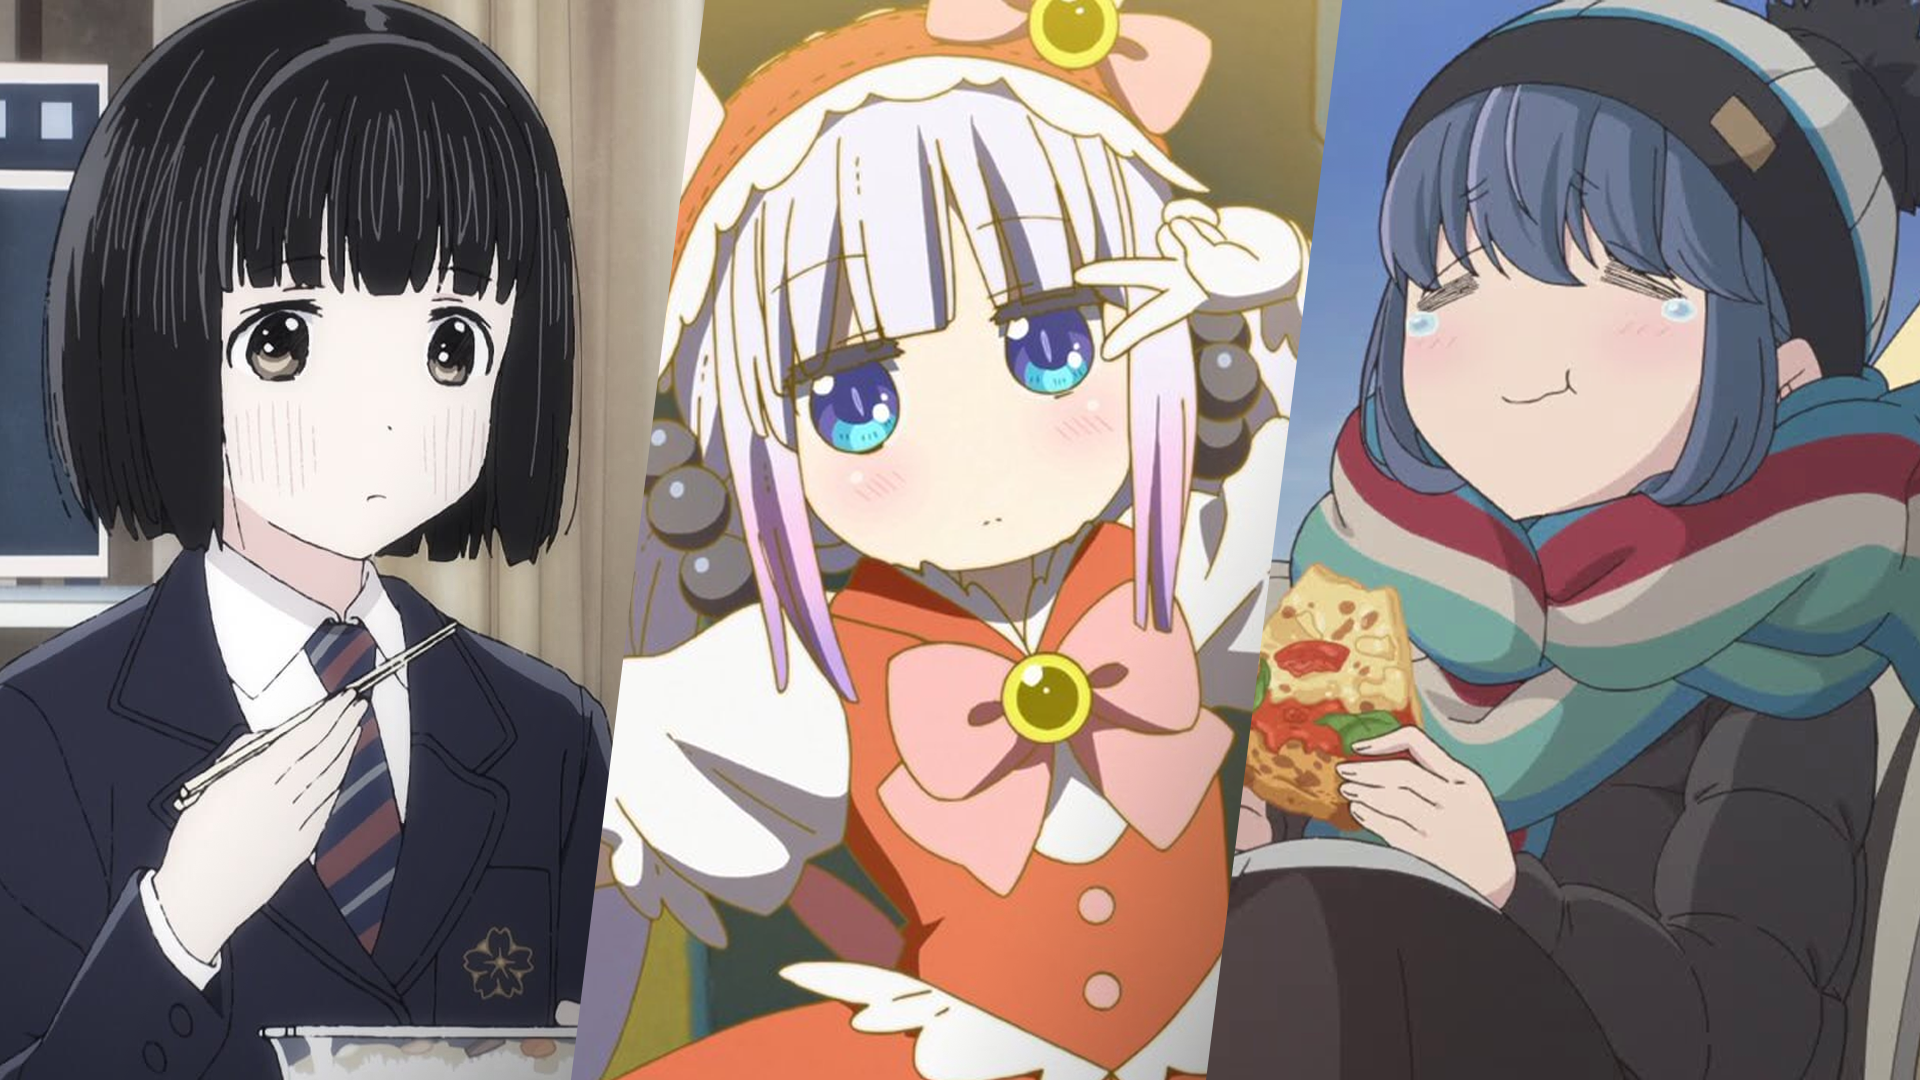 Comfy 2021 Anime to Enjoy During This Holiday Season